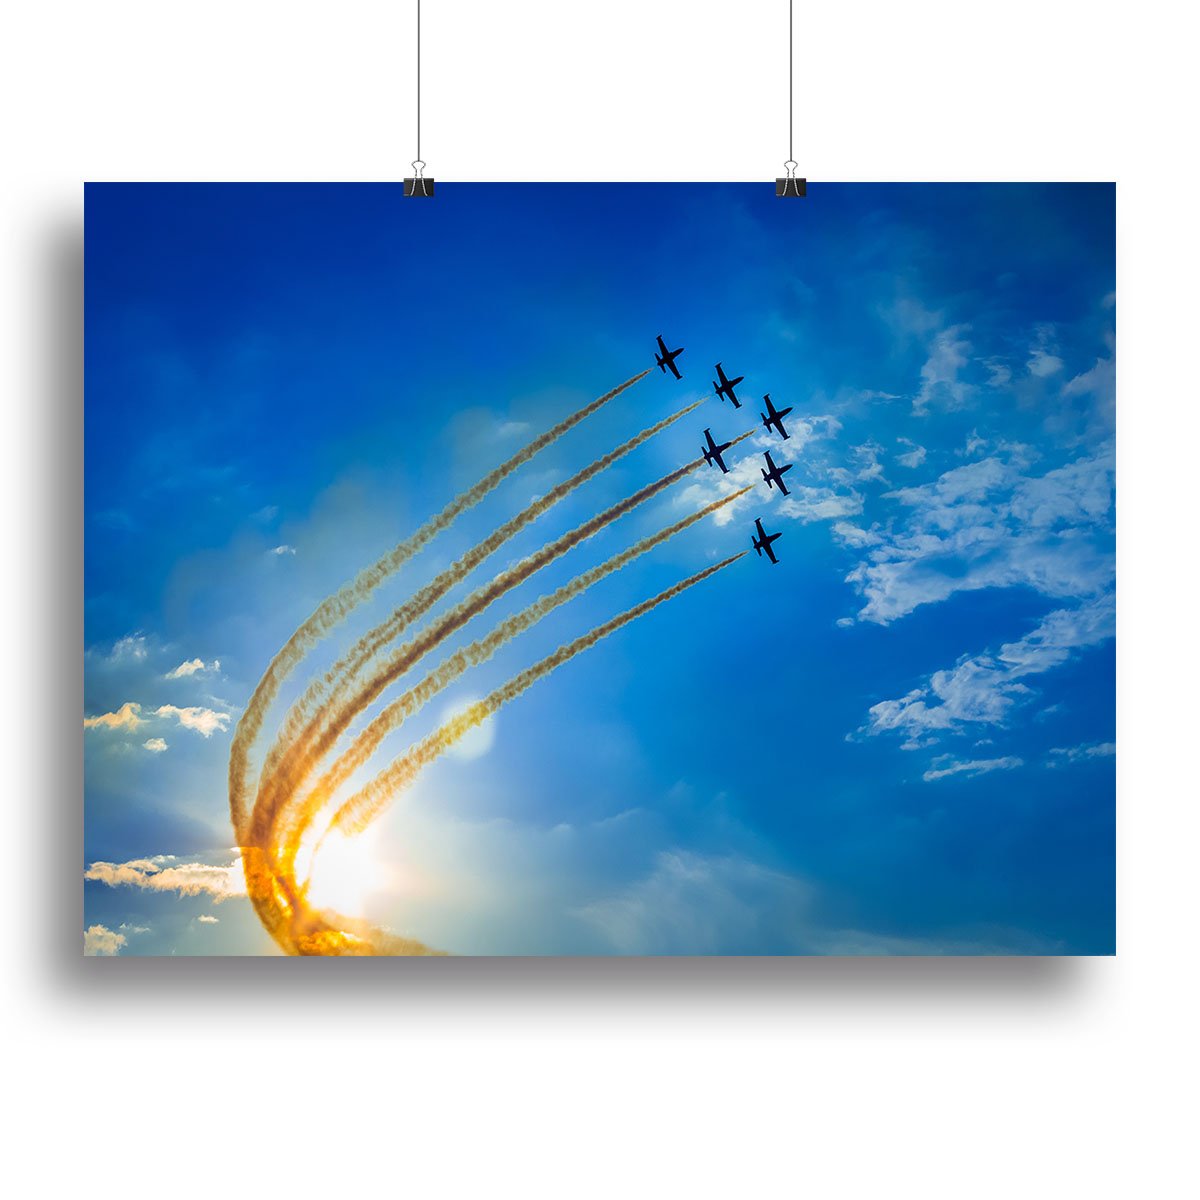 Aerobatic team performs flight Canvas Print or Poster